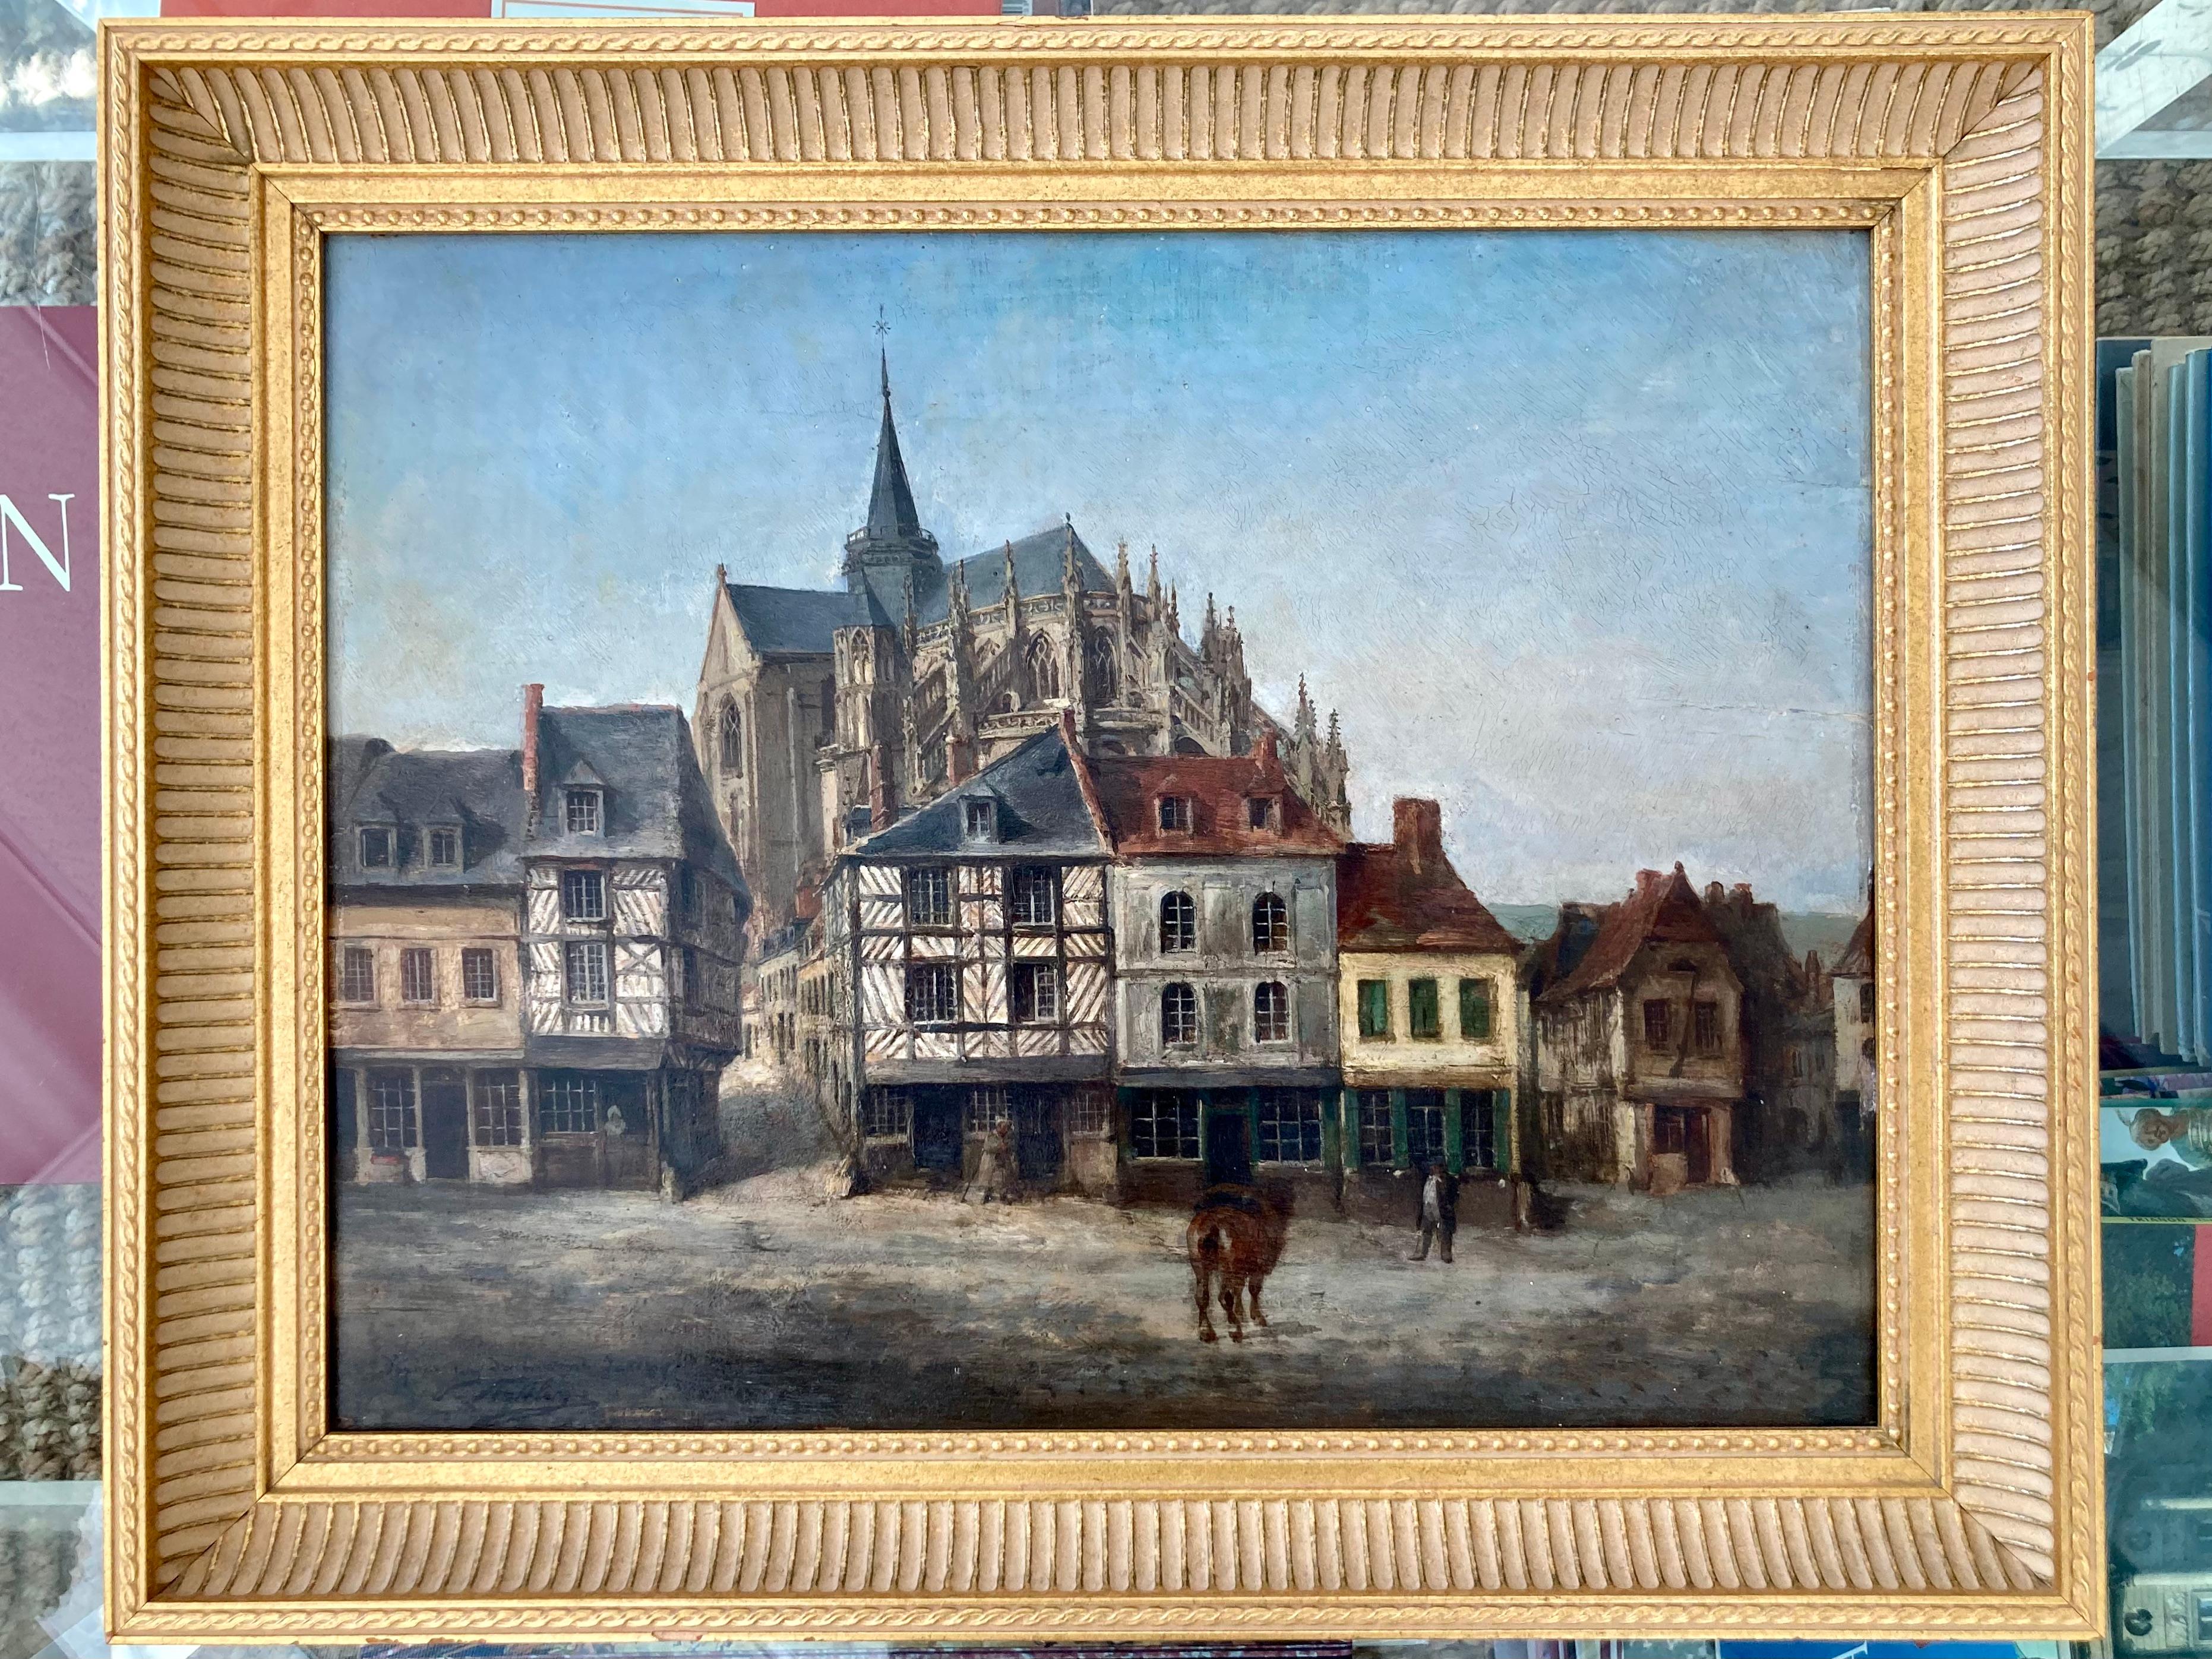 Belle peinture de village de Normandie.

Dimensions de la vue : 17,5 